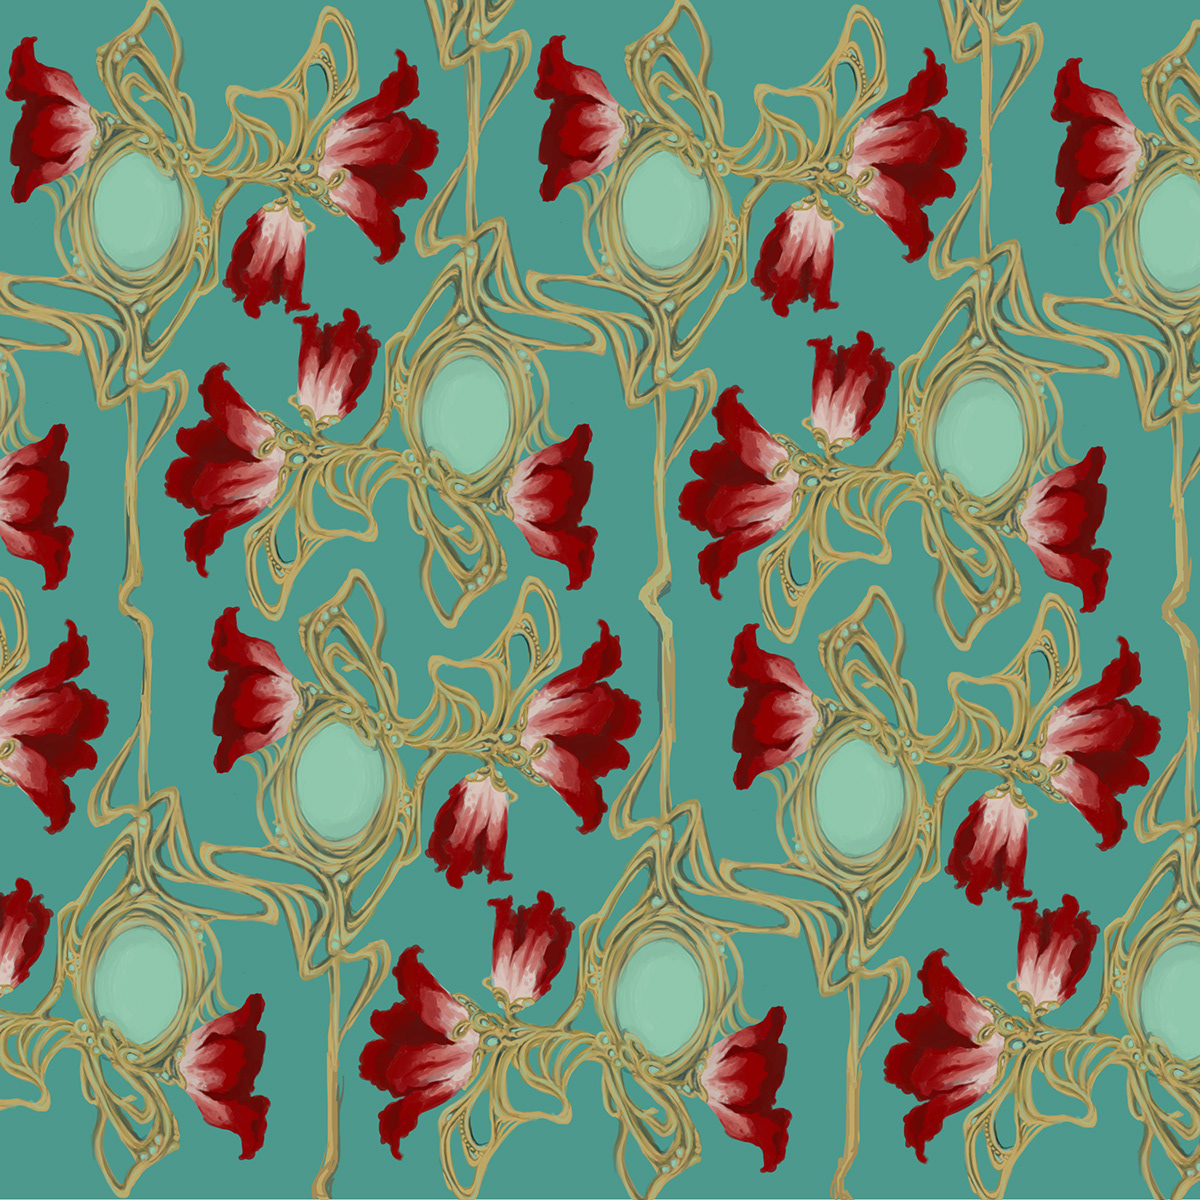 art nouveau Sara K Dunn art nouveau pattern repeating pattern Patterns art nouveau wallpaper Wallpaper design